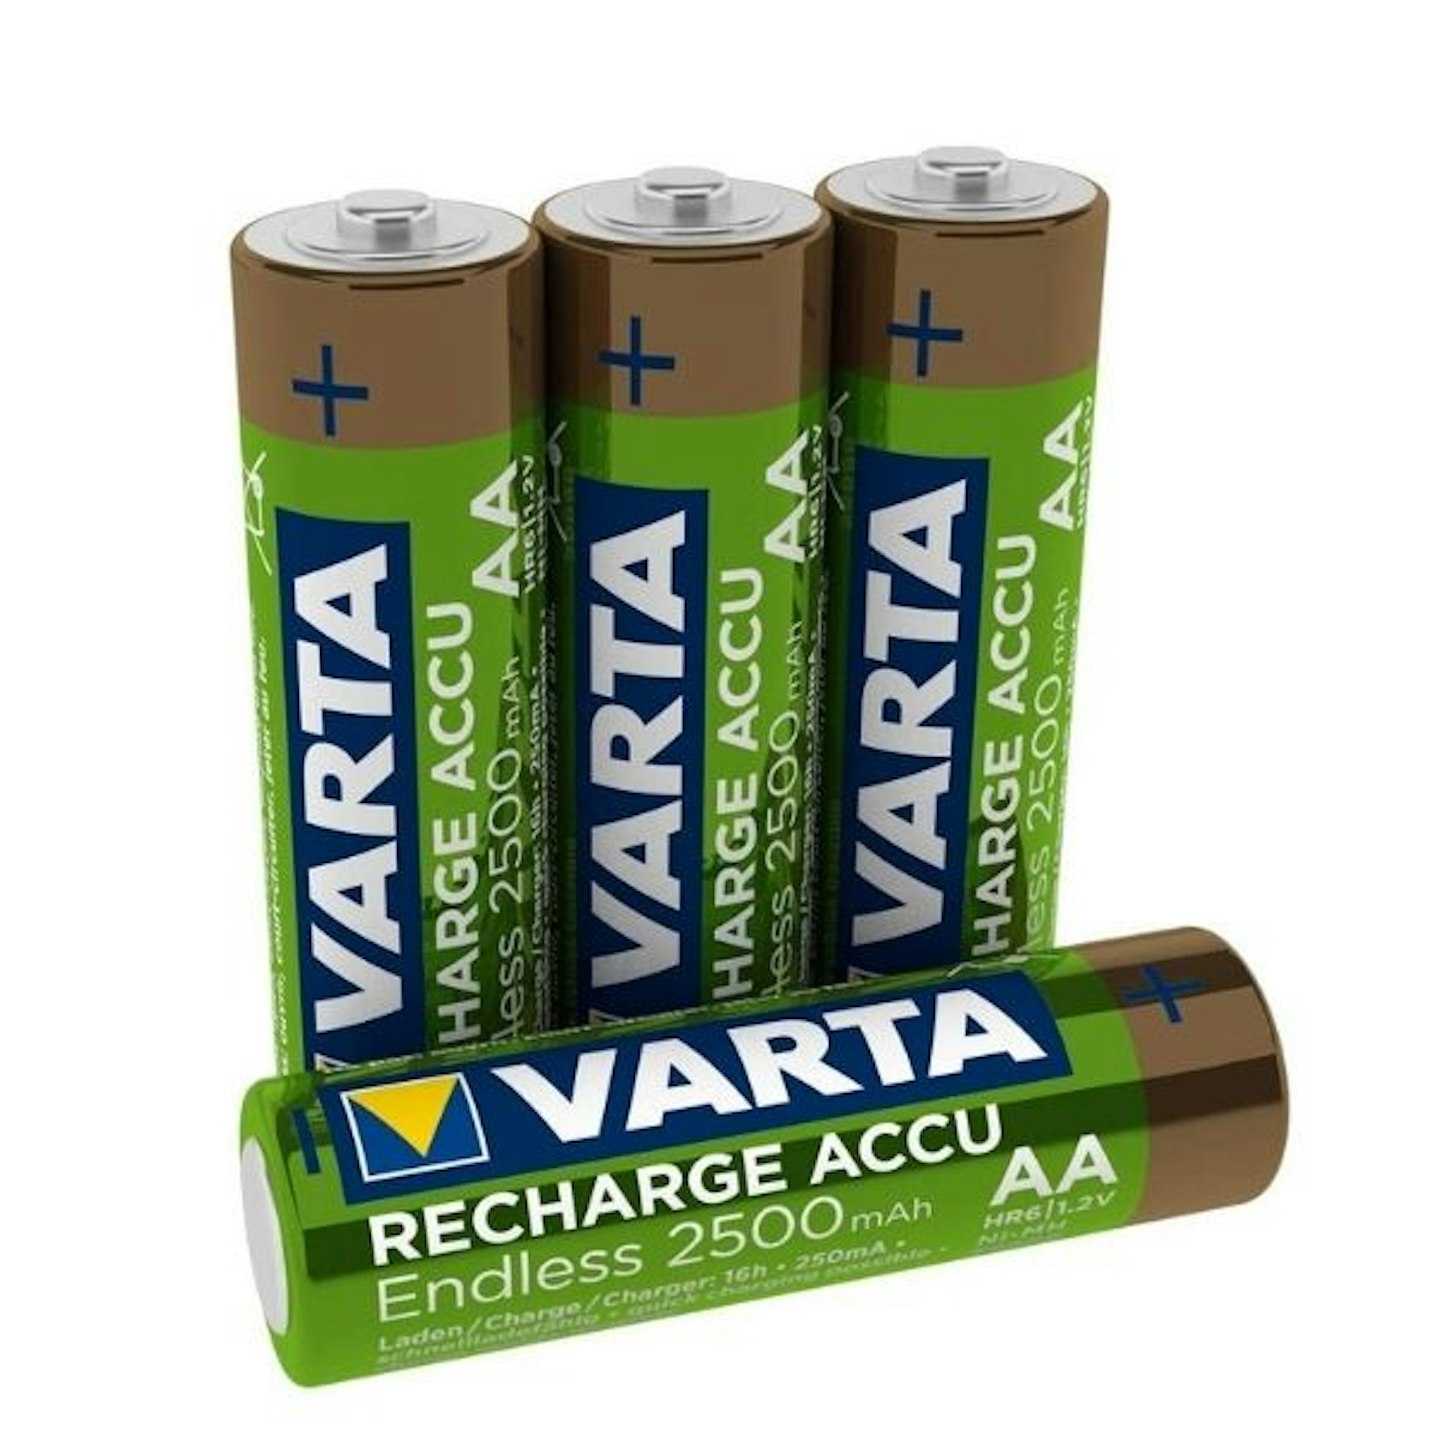 VARTA Recharge Accu Endless Energy AA batteries